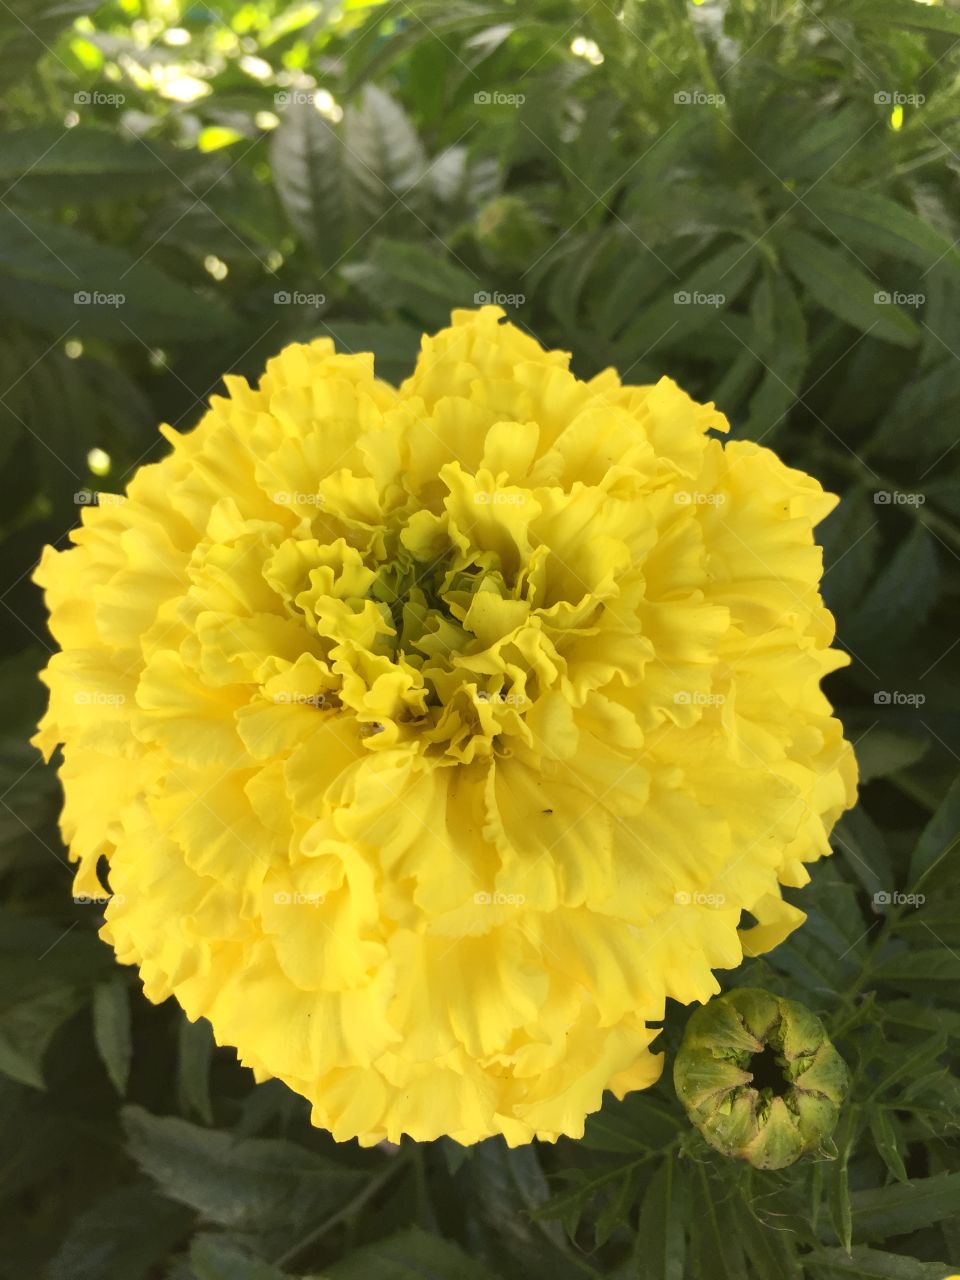 Pretty yellow flower.